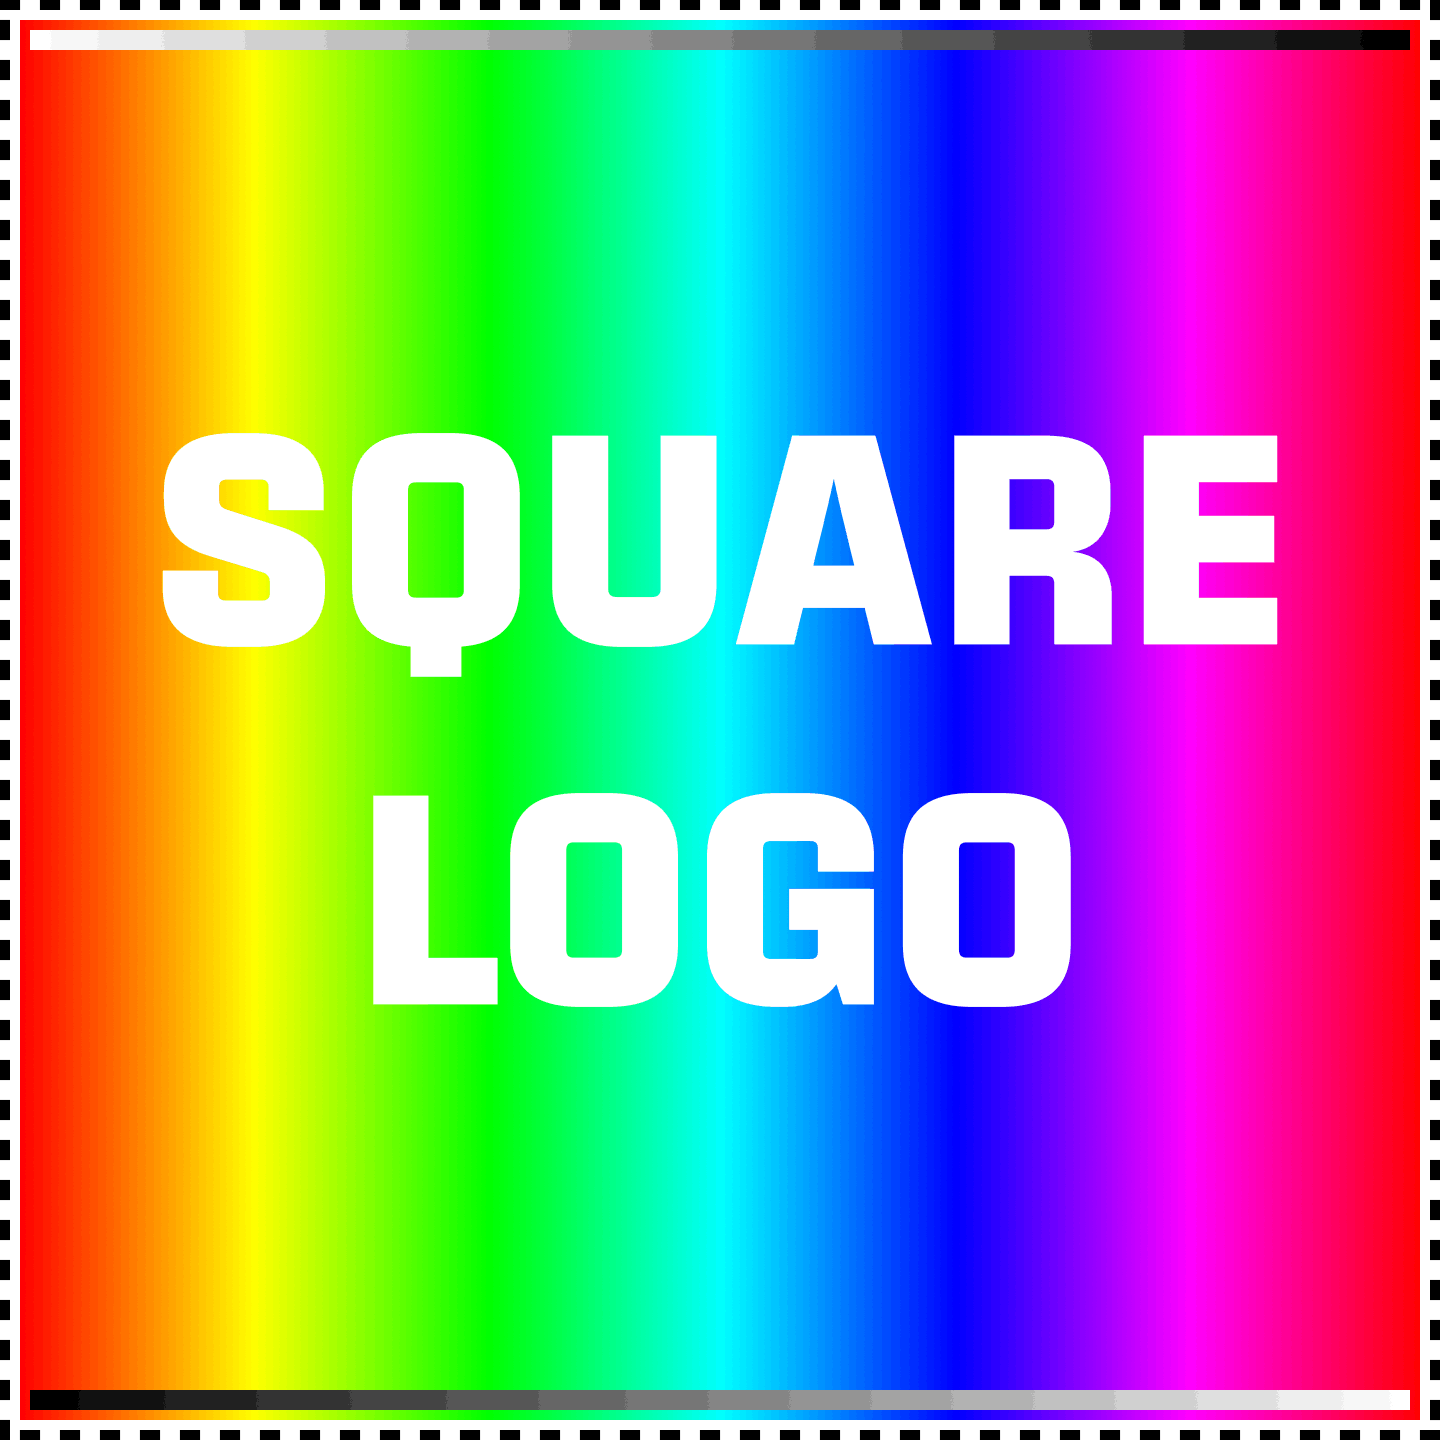 square_logo.png